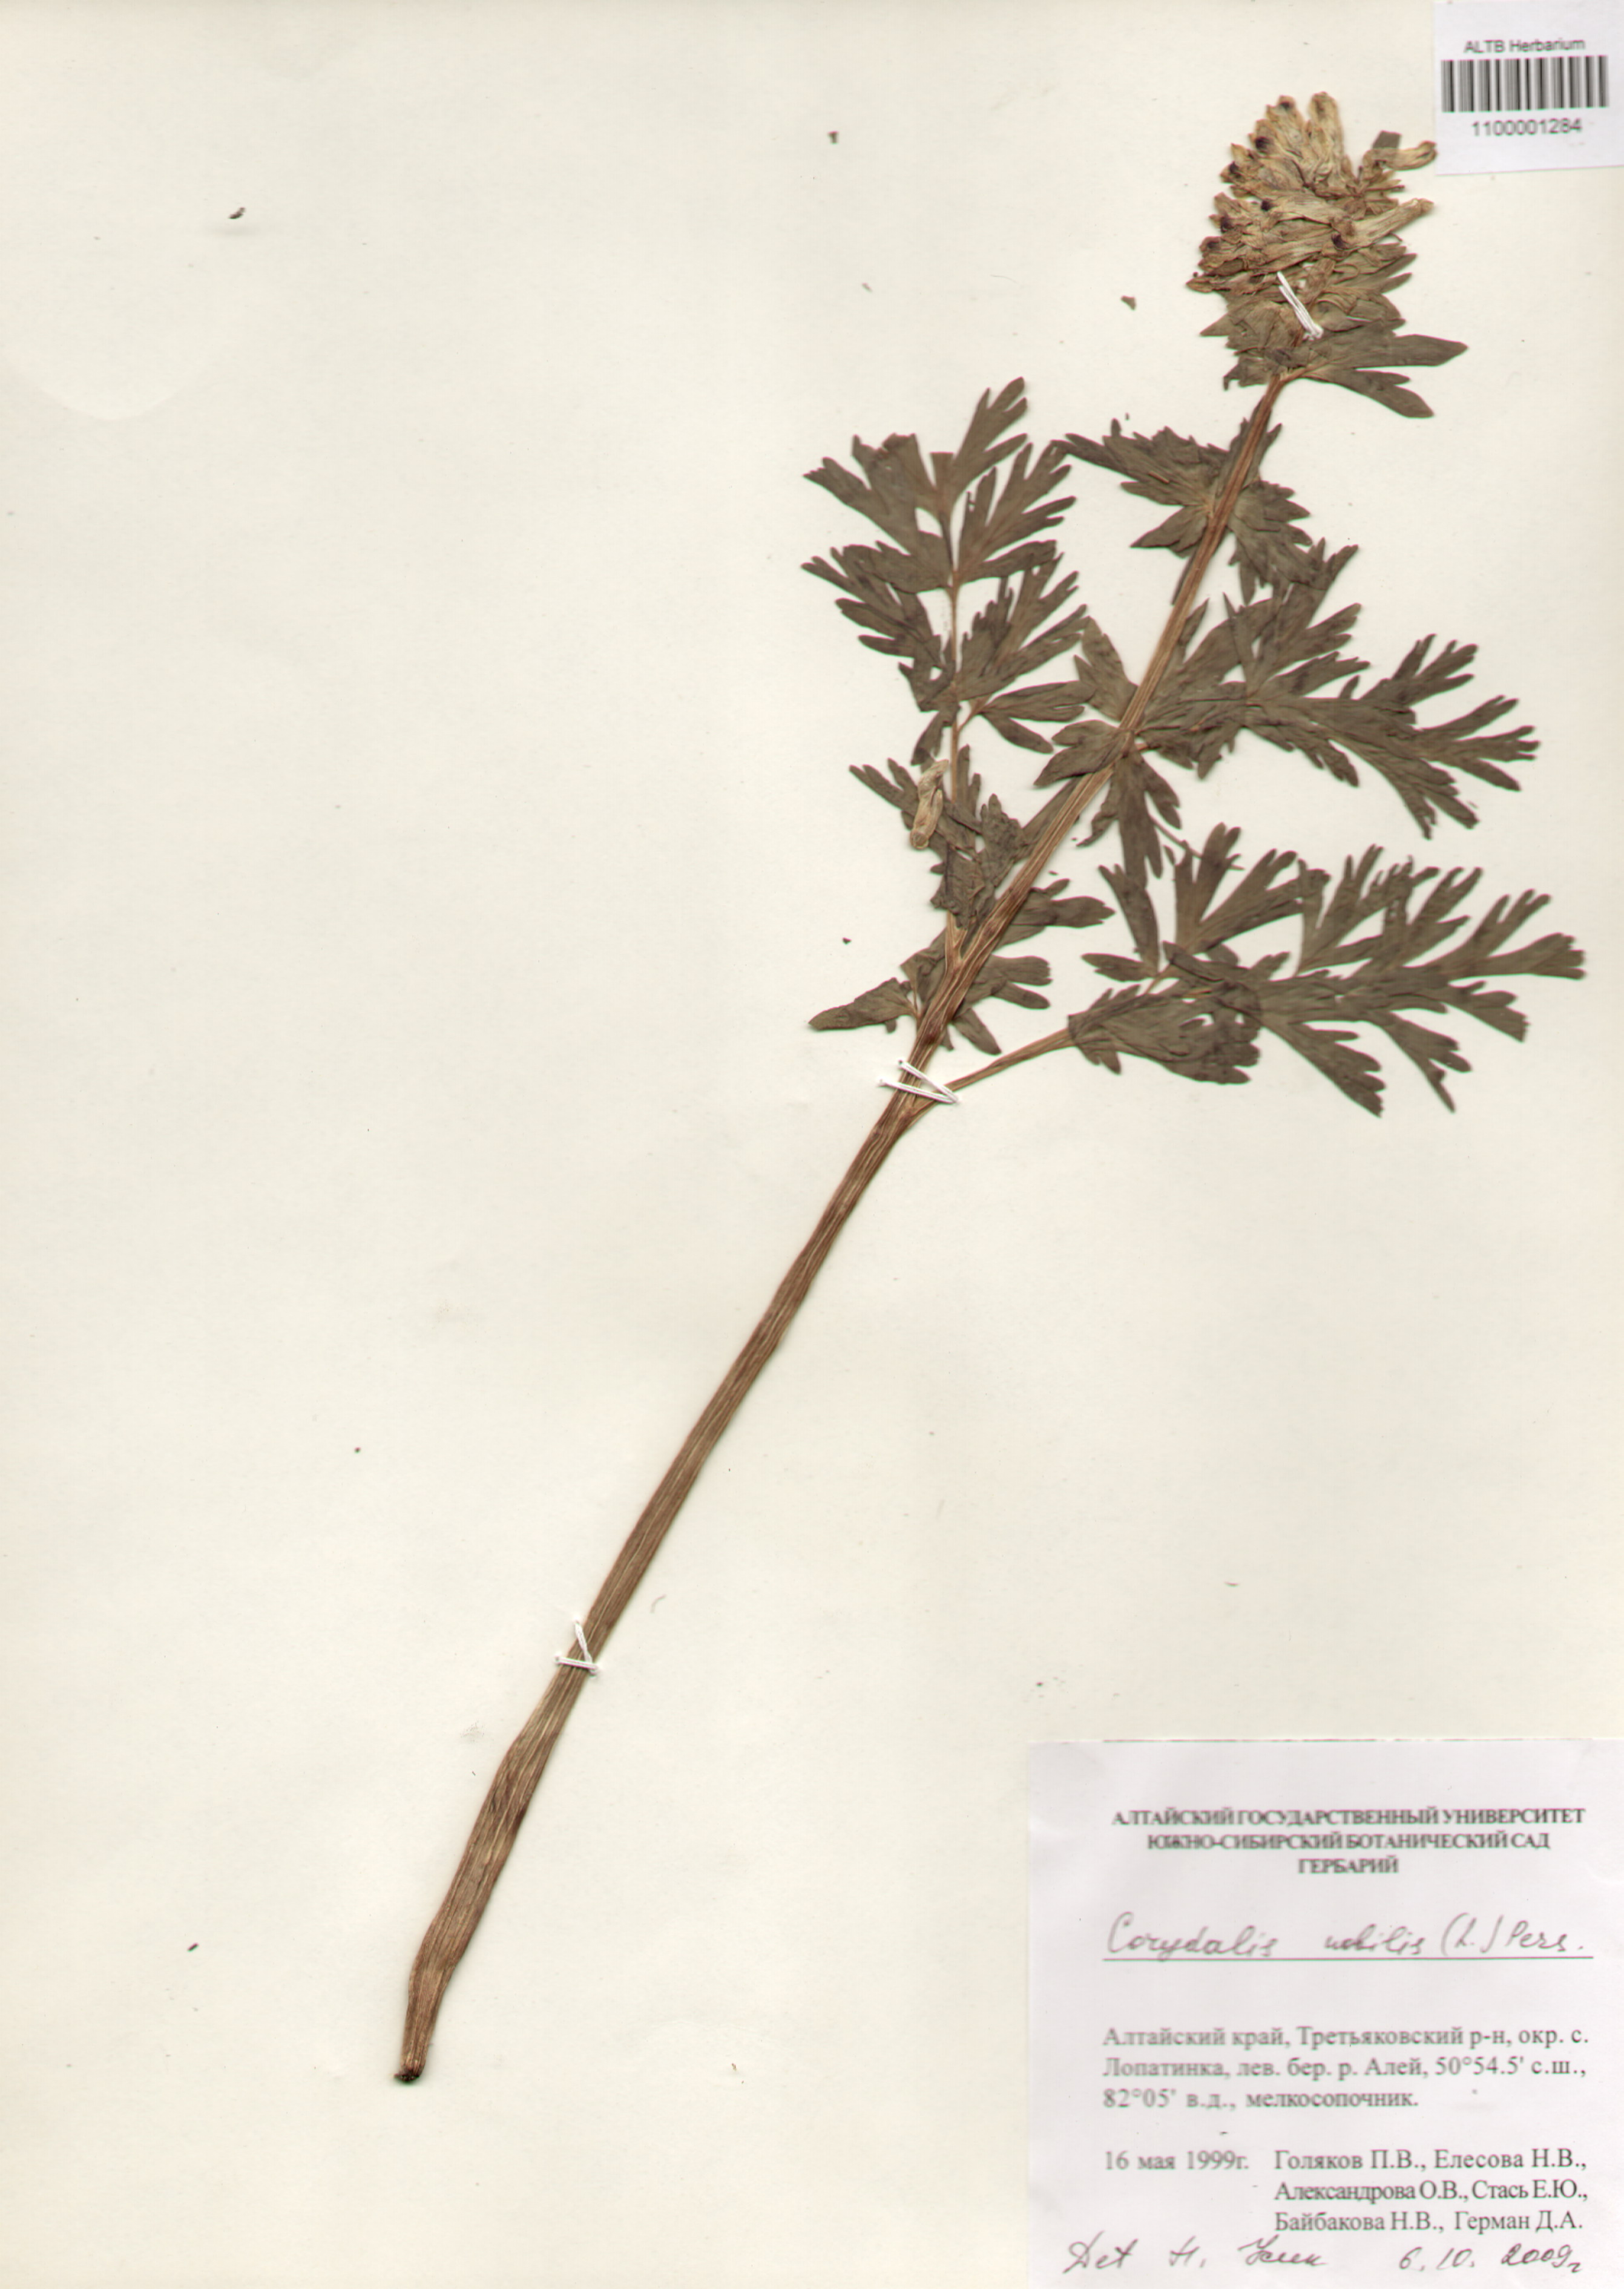 Fumariaceae,Corydalis nobilis (L.) Pers.